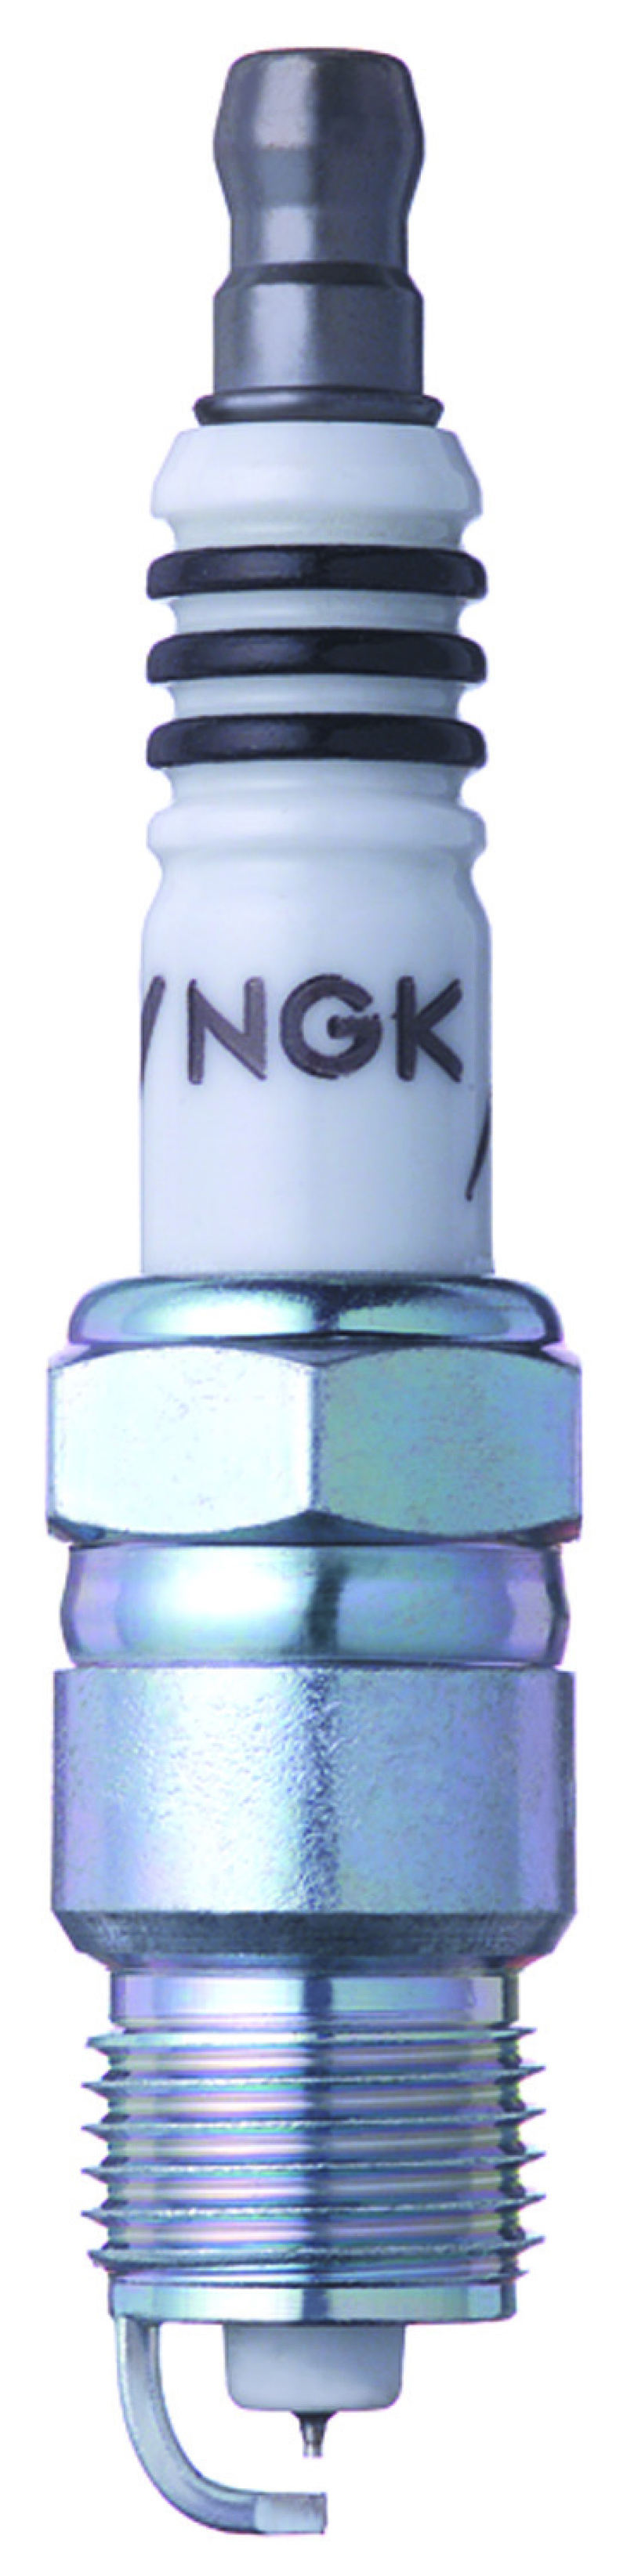 NGK Racing Spark Plug Box of 4 (UR4IX) - 7401